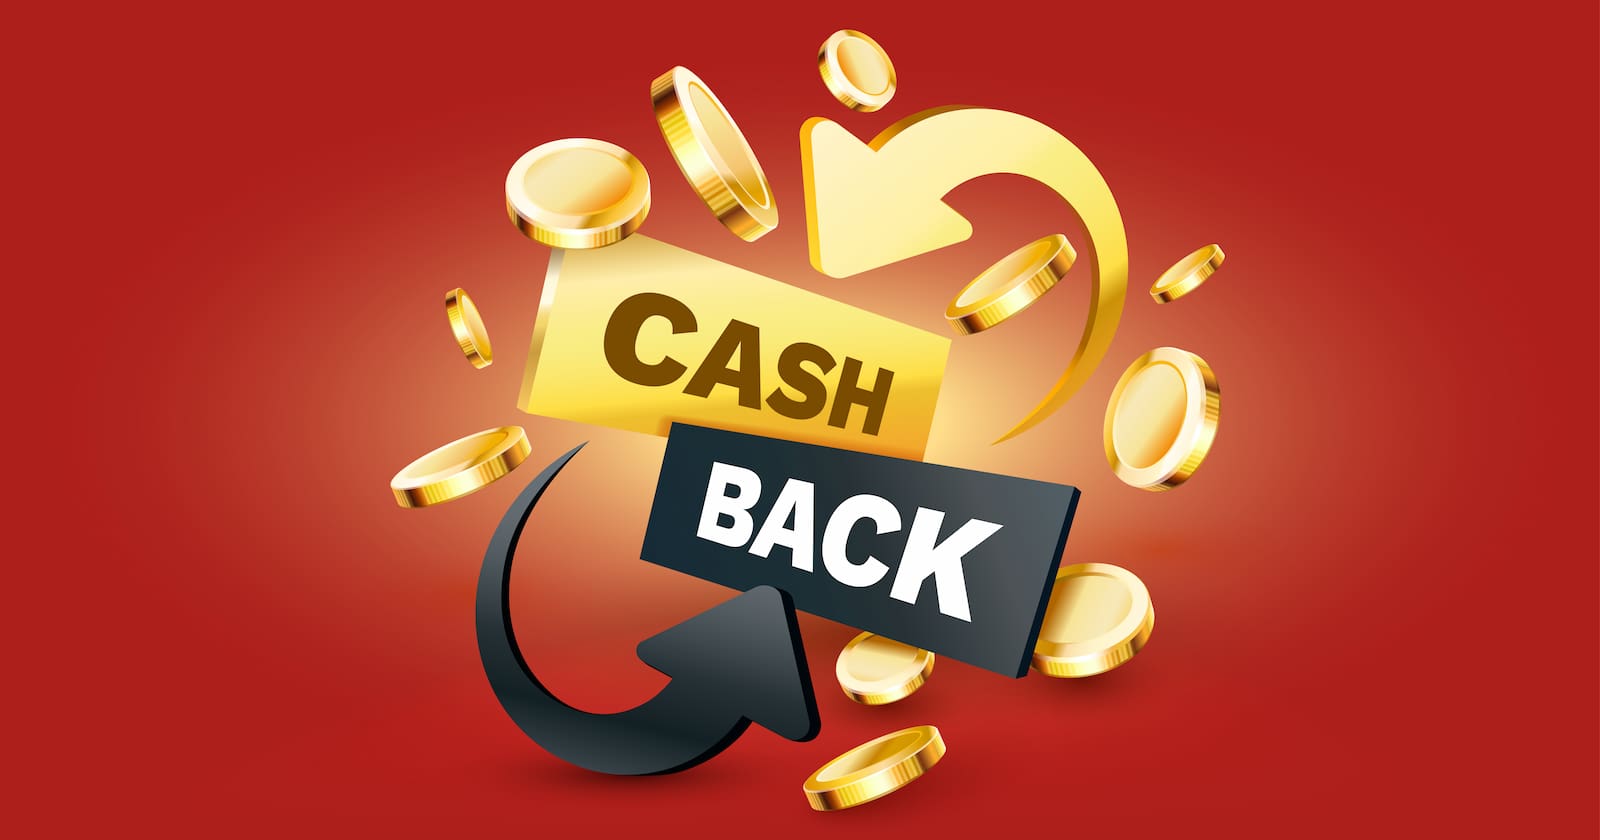 Cashback Casino